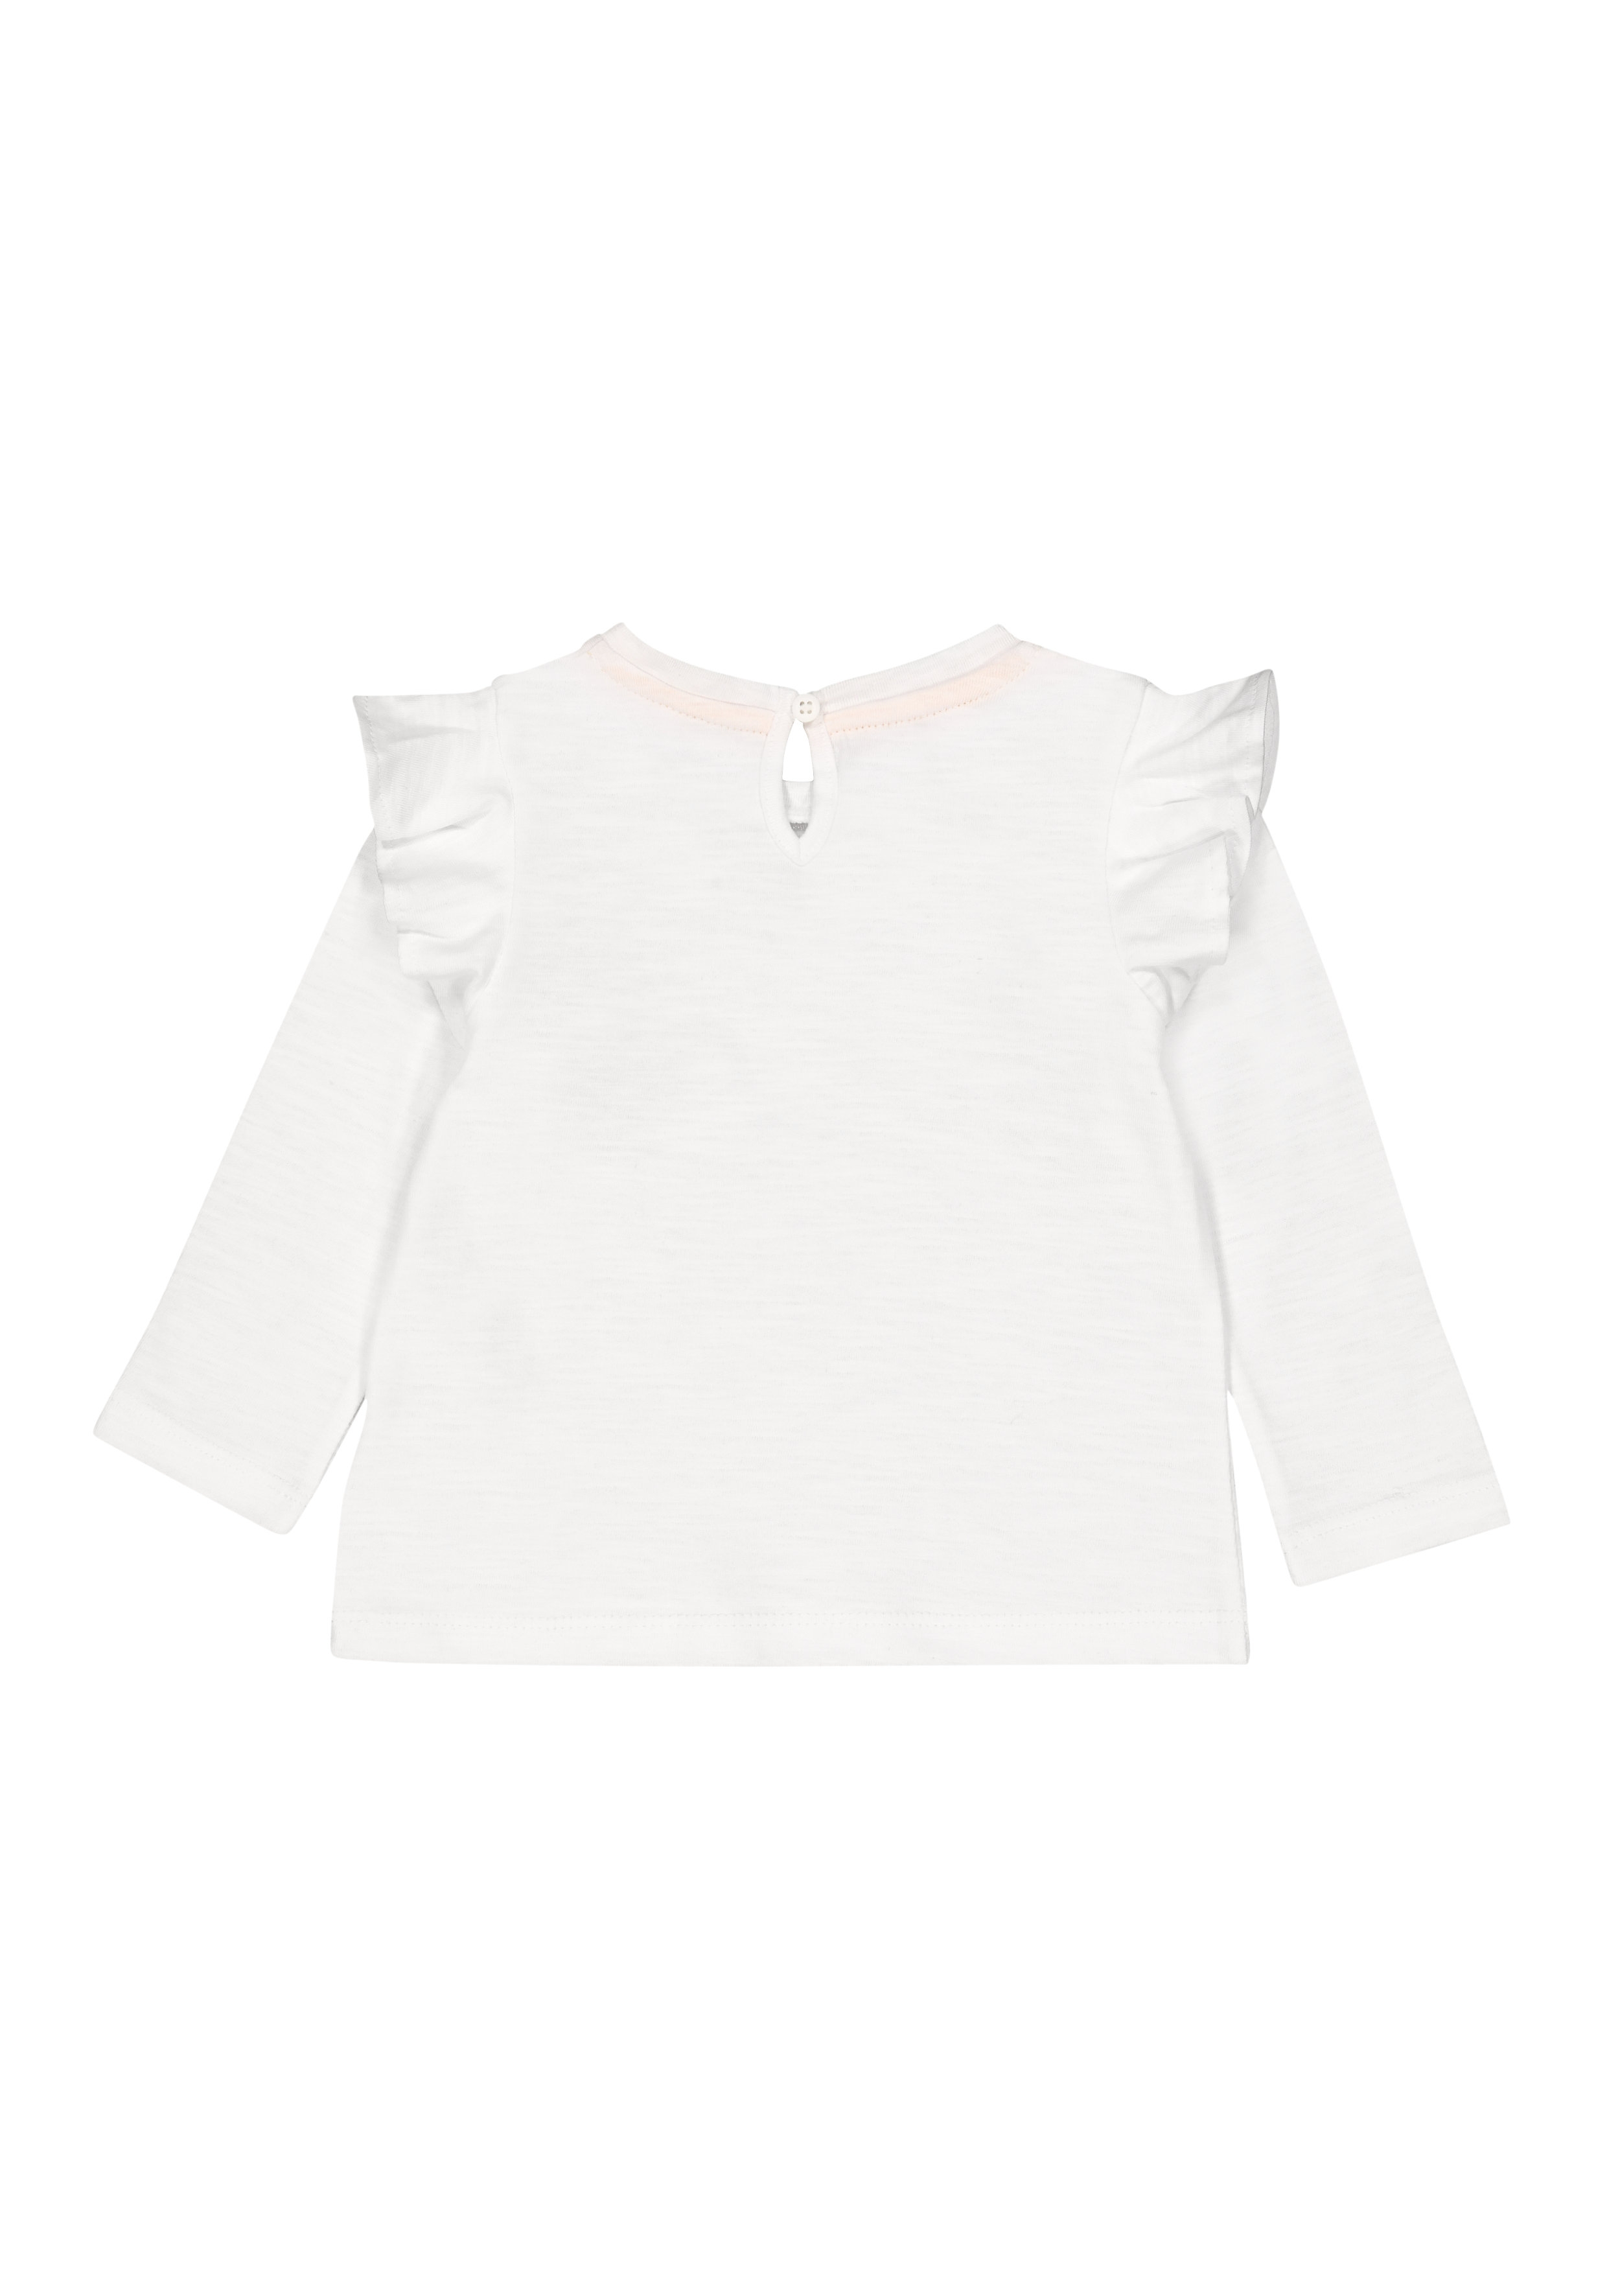 Girls Full Sleeves T-Shirt Sparkly Bee Print - White